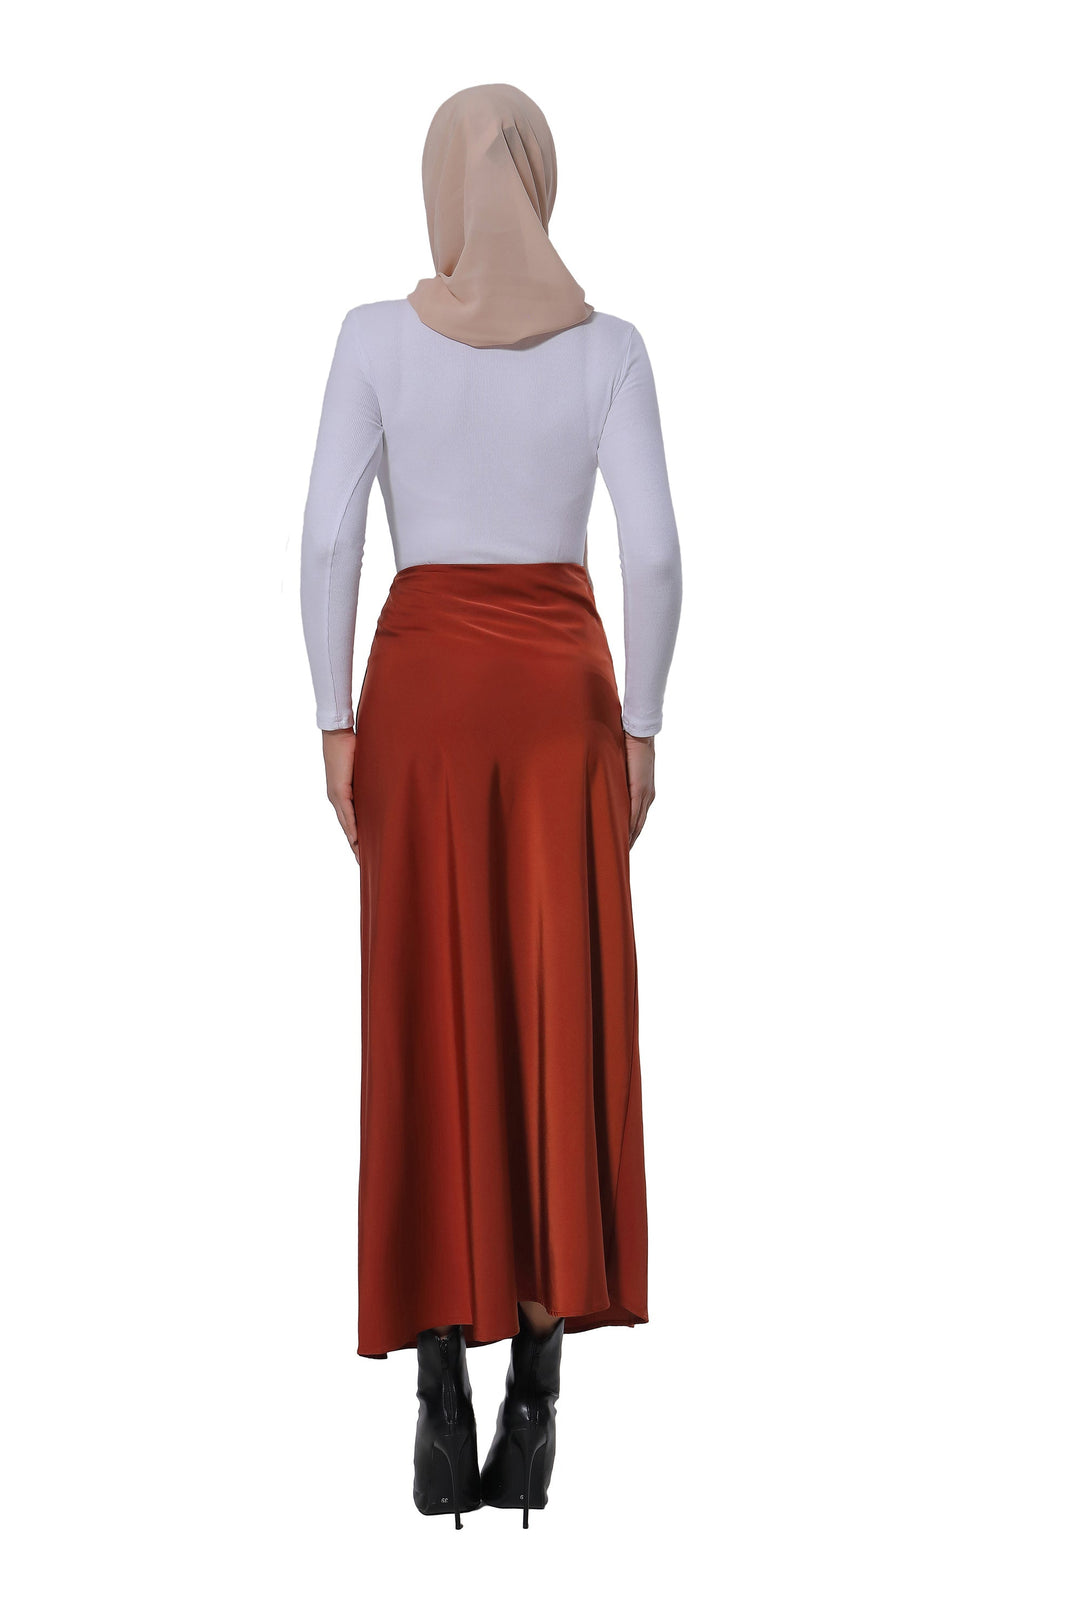 Urban Modesty - Burnt Orange Satin Skirt